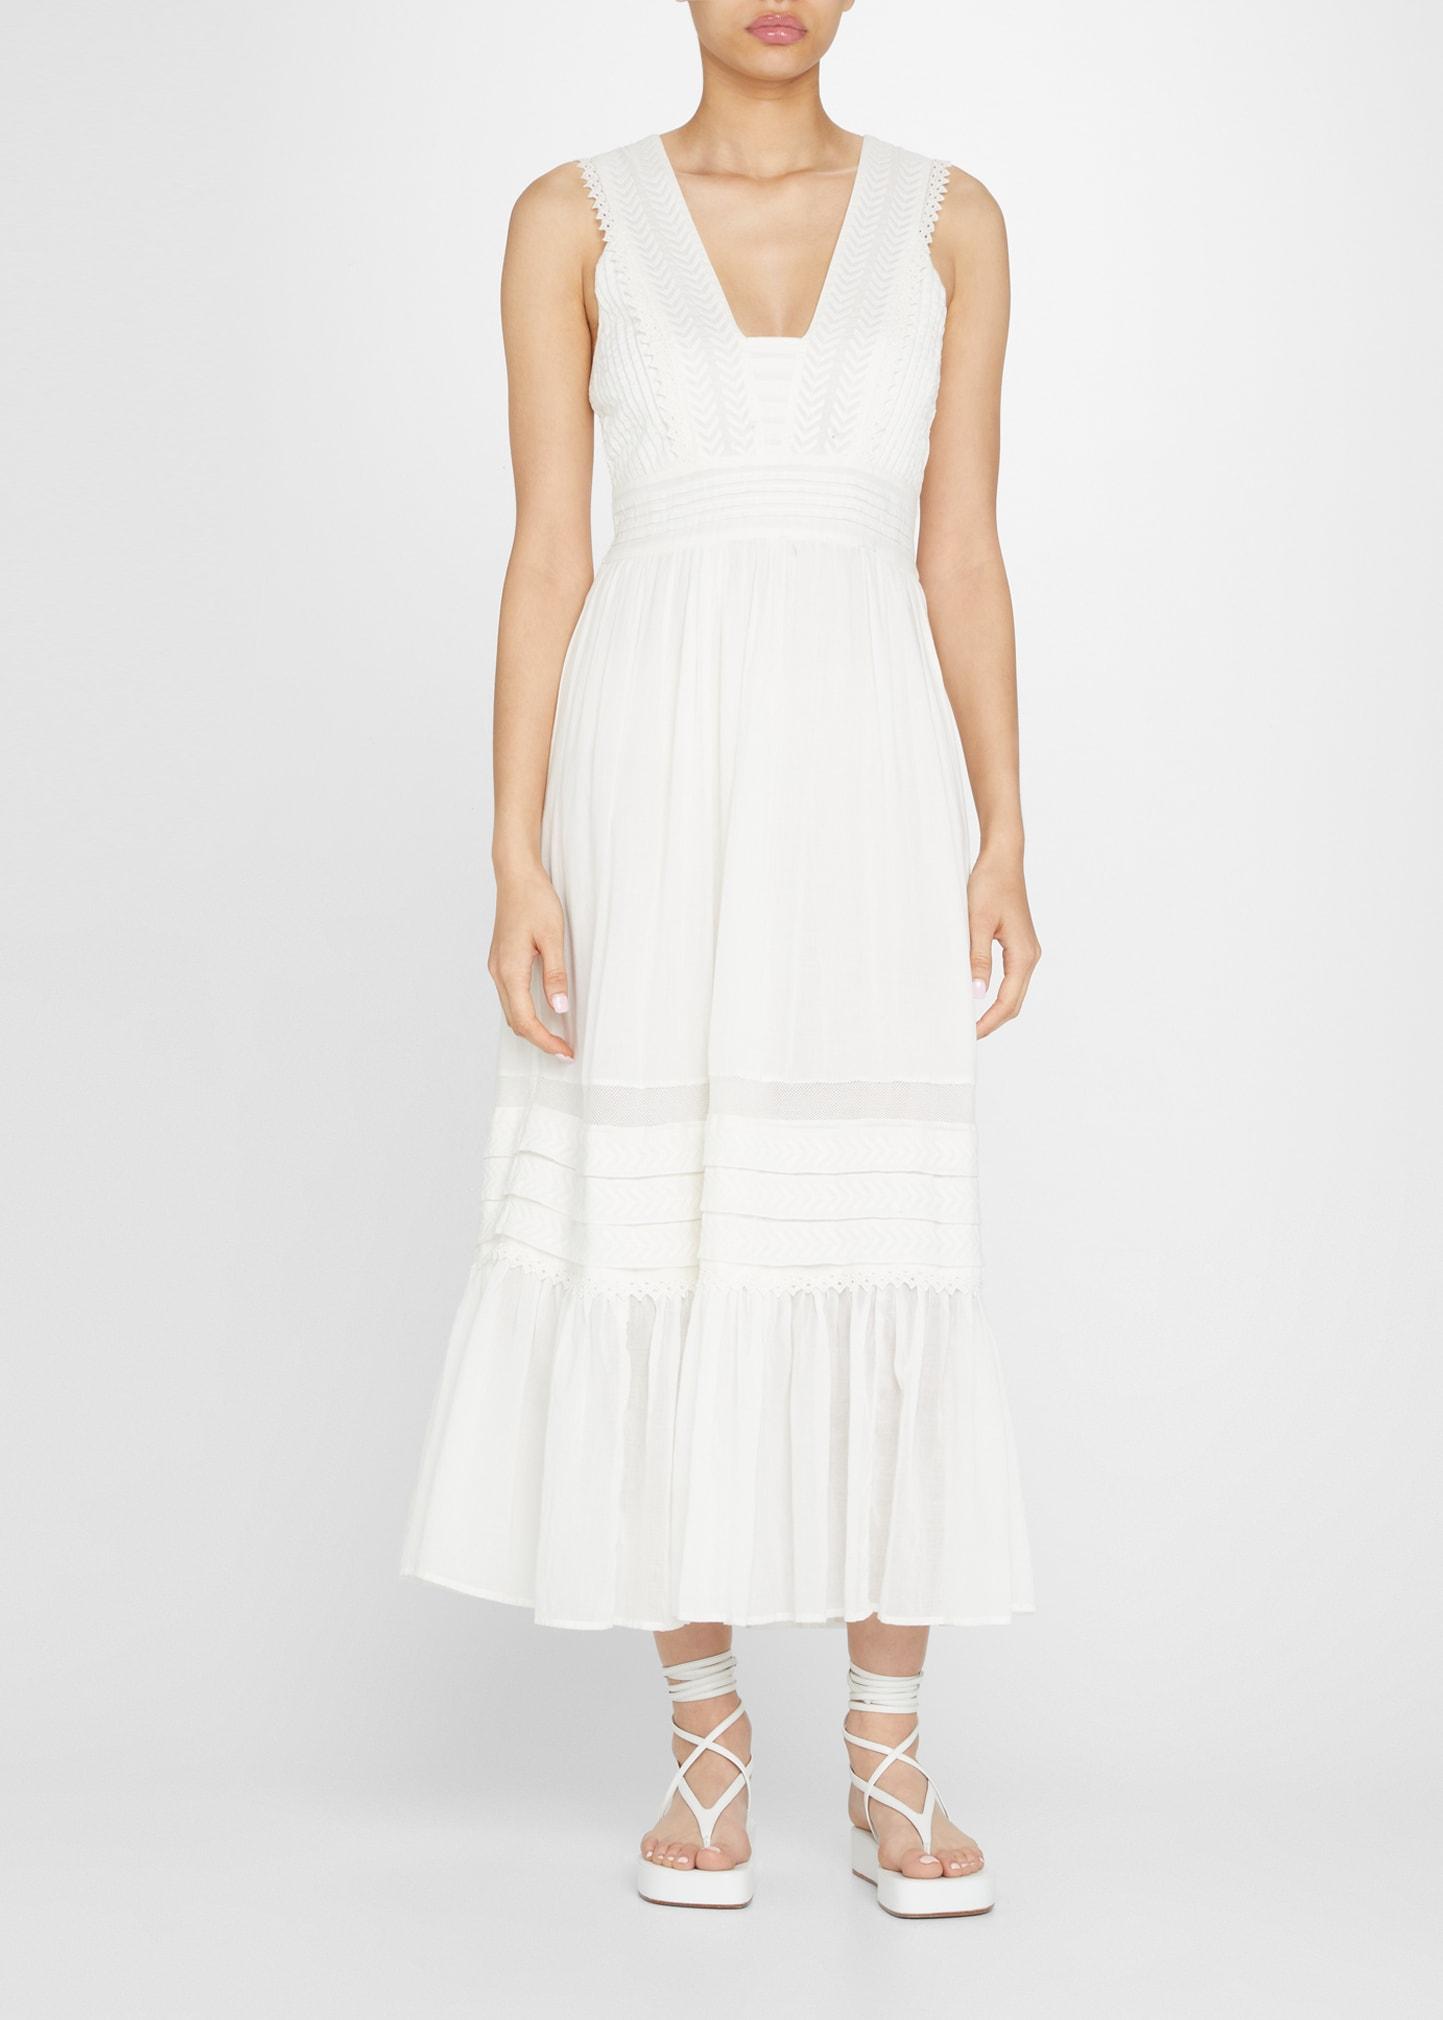 Ramy Brook Lulu Chevron Textured Midi Dress in White | Lyst